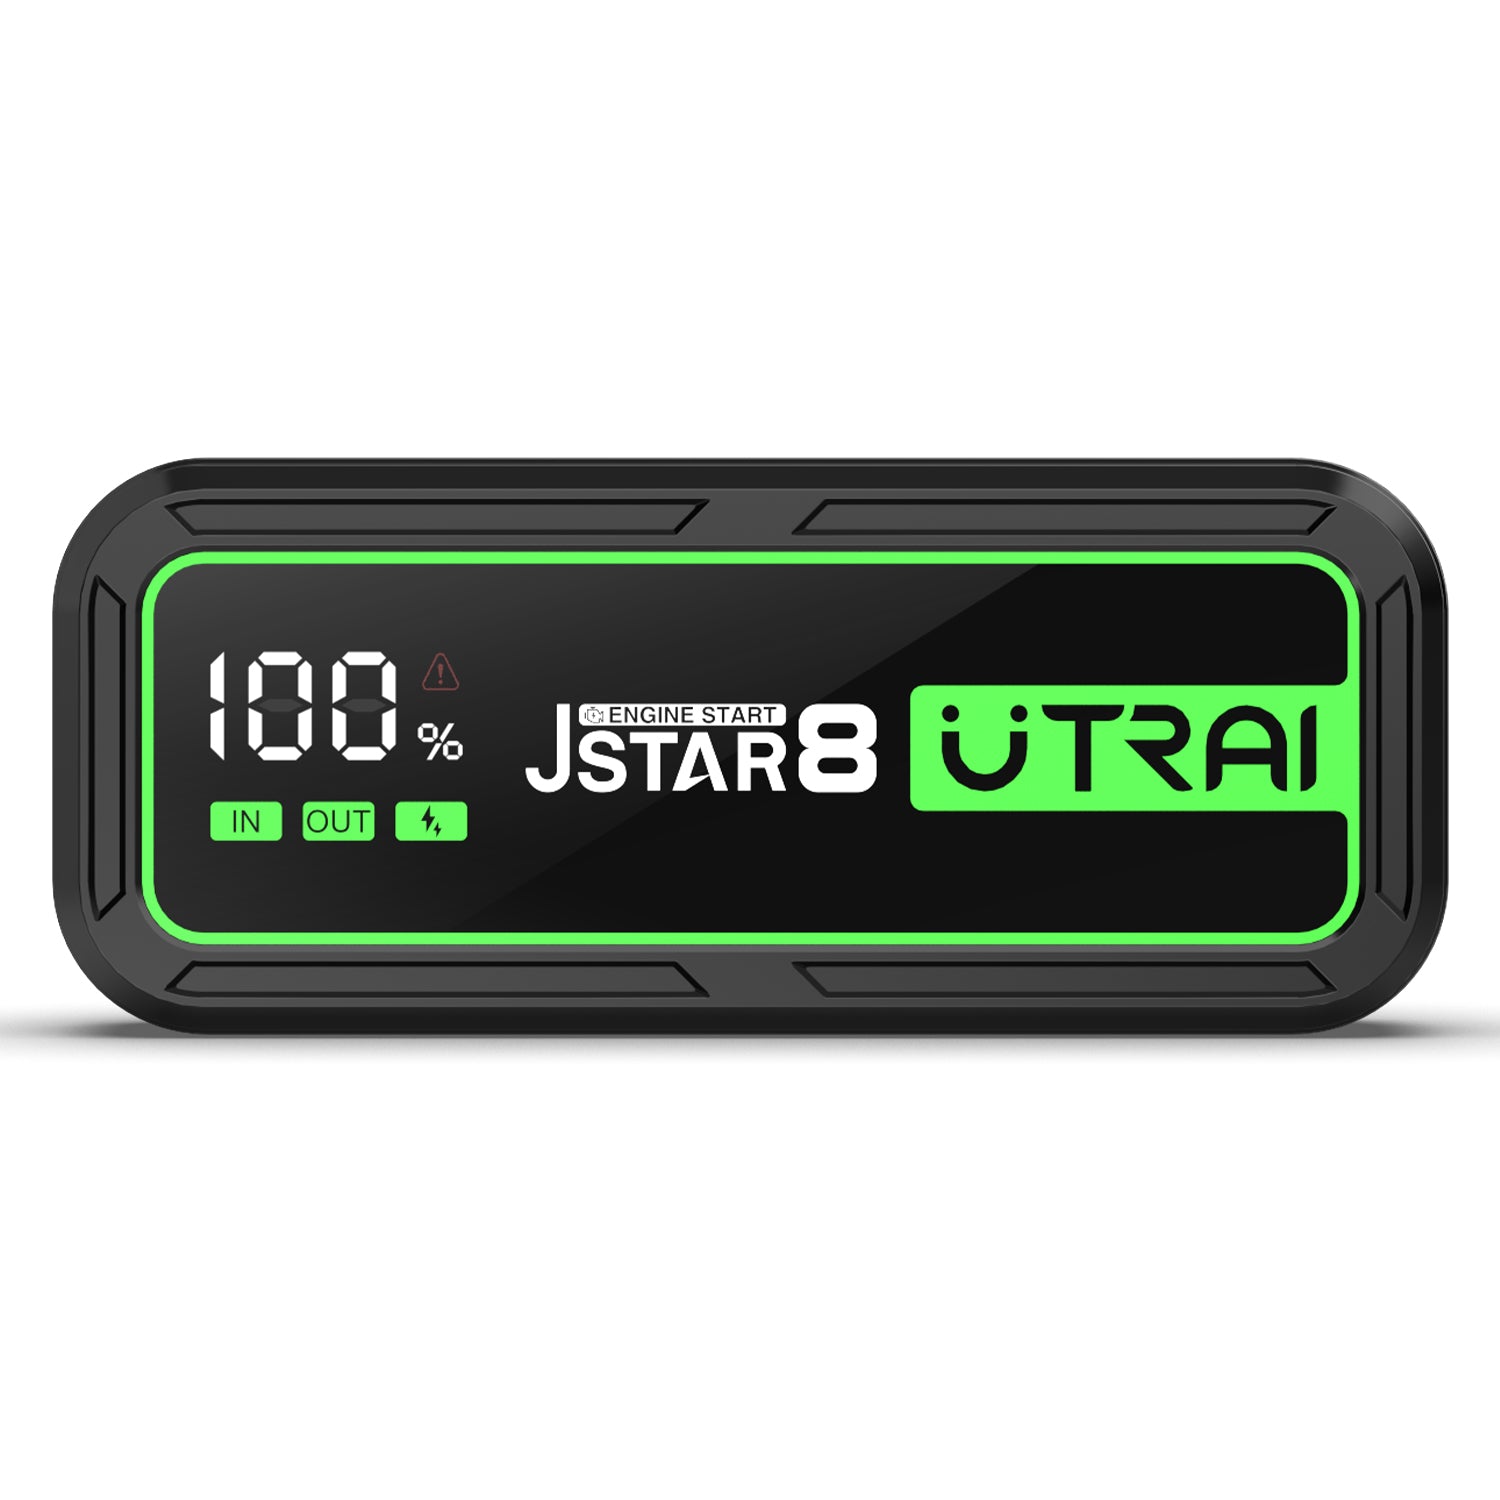 UTRAI Starthilfe Powerbank,13200mAh 1400A Spitzenstrom,12V Tragbare